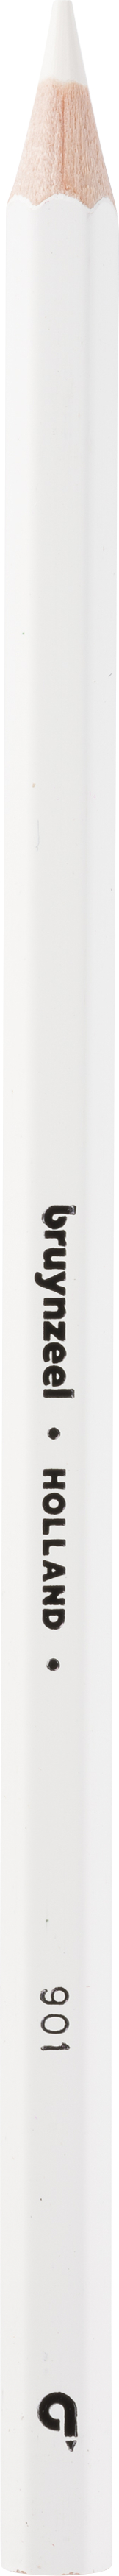 BRUYNZEEL Crayon de couleur Super 3.3mm 60516901 blanc